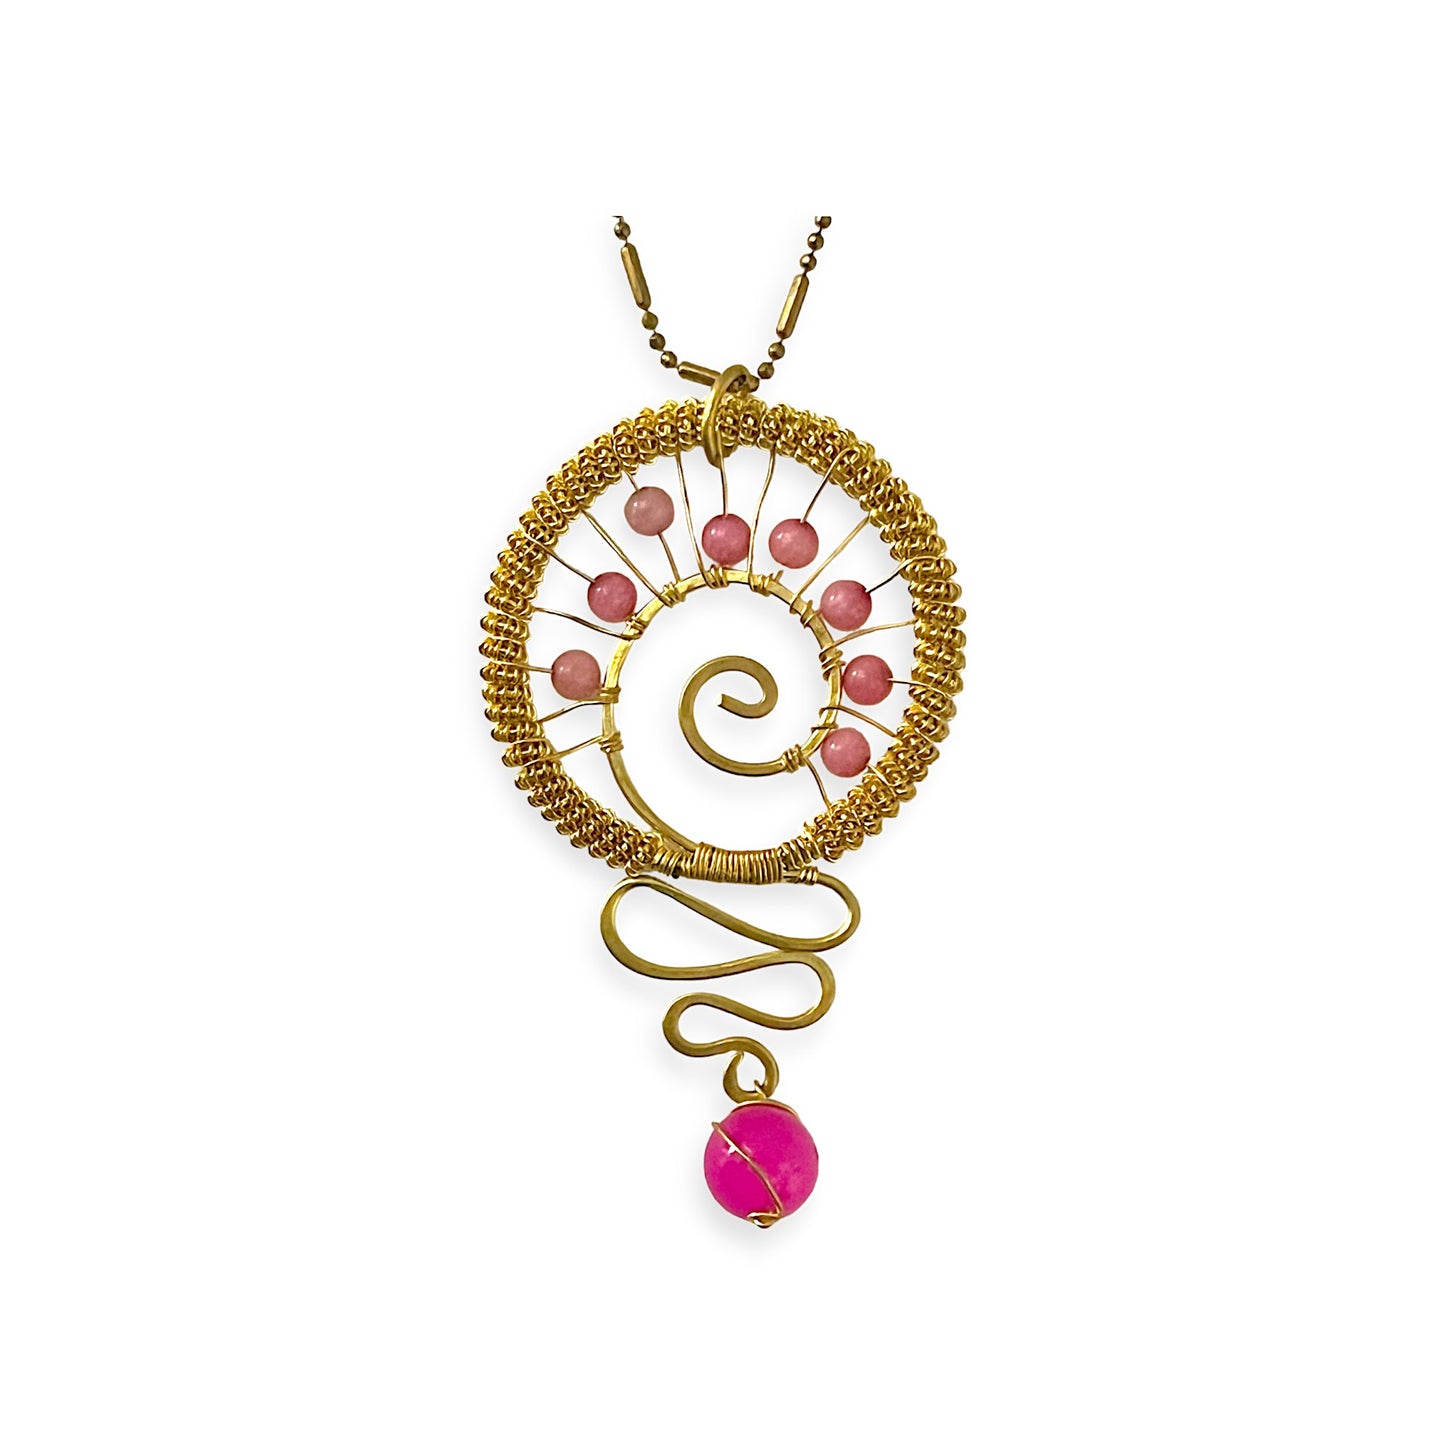 Seashell inspired pendant necklace - Sundara Joon